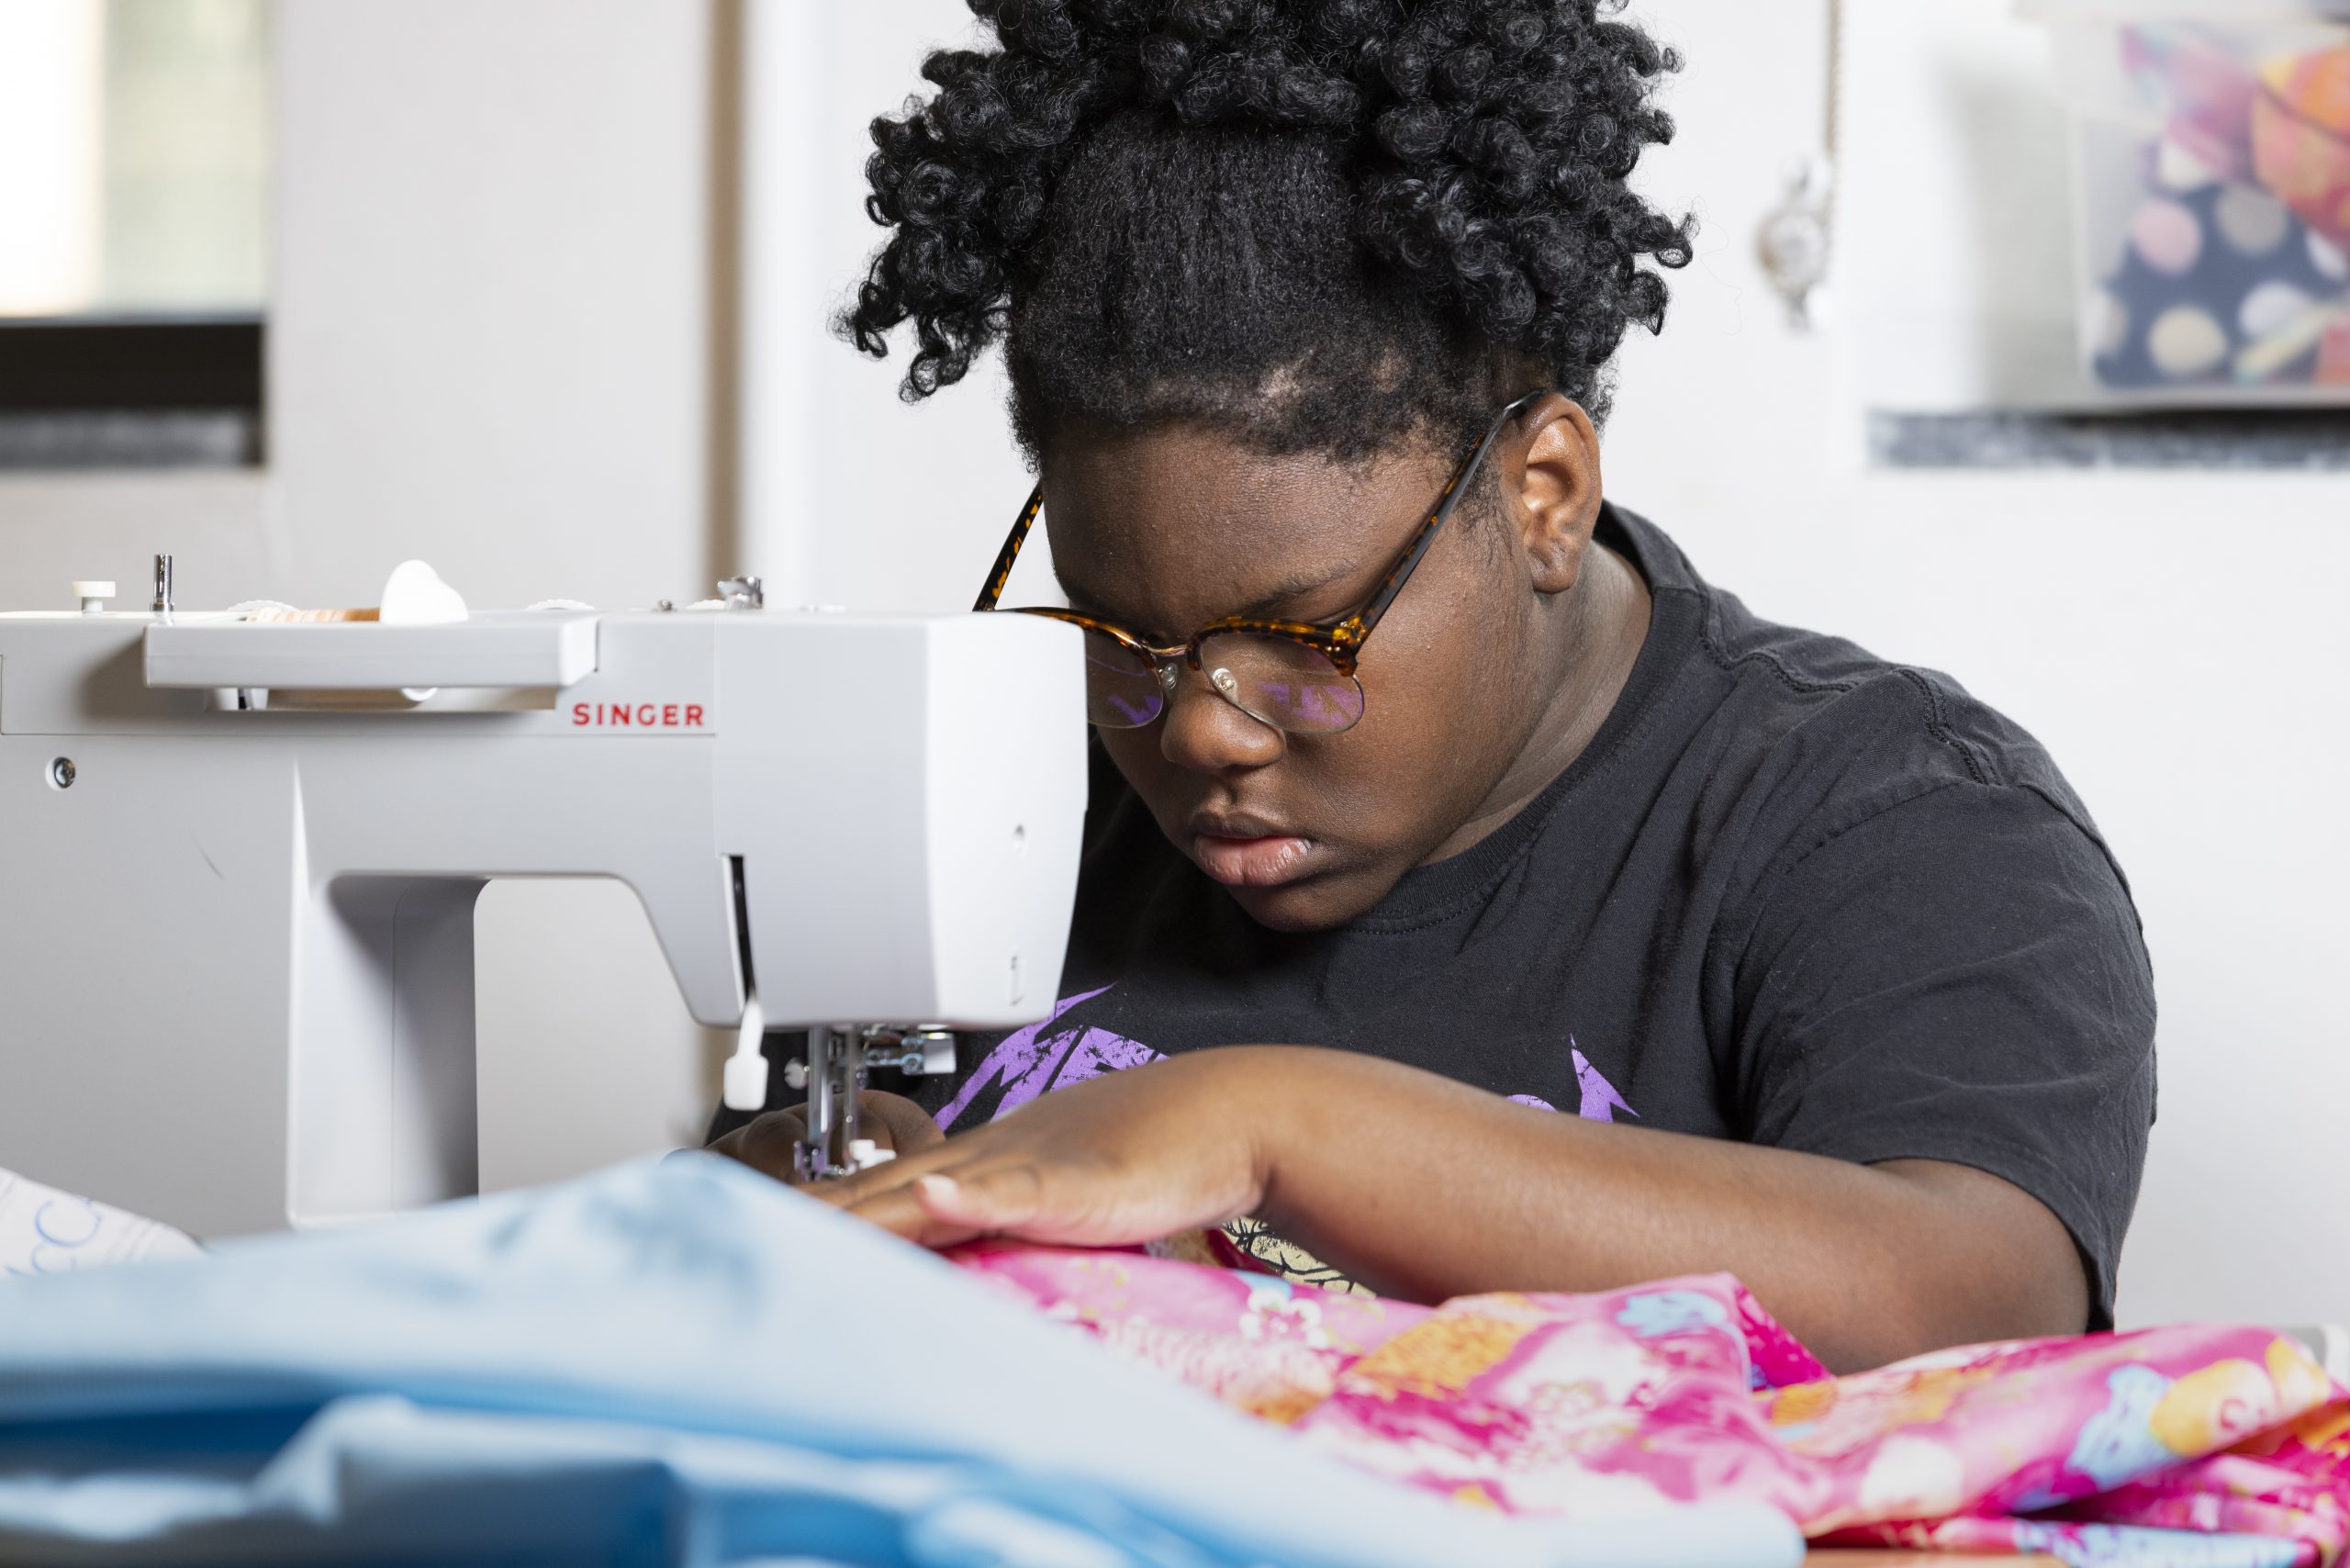 A child sews fabric using a sewing machine